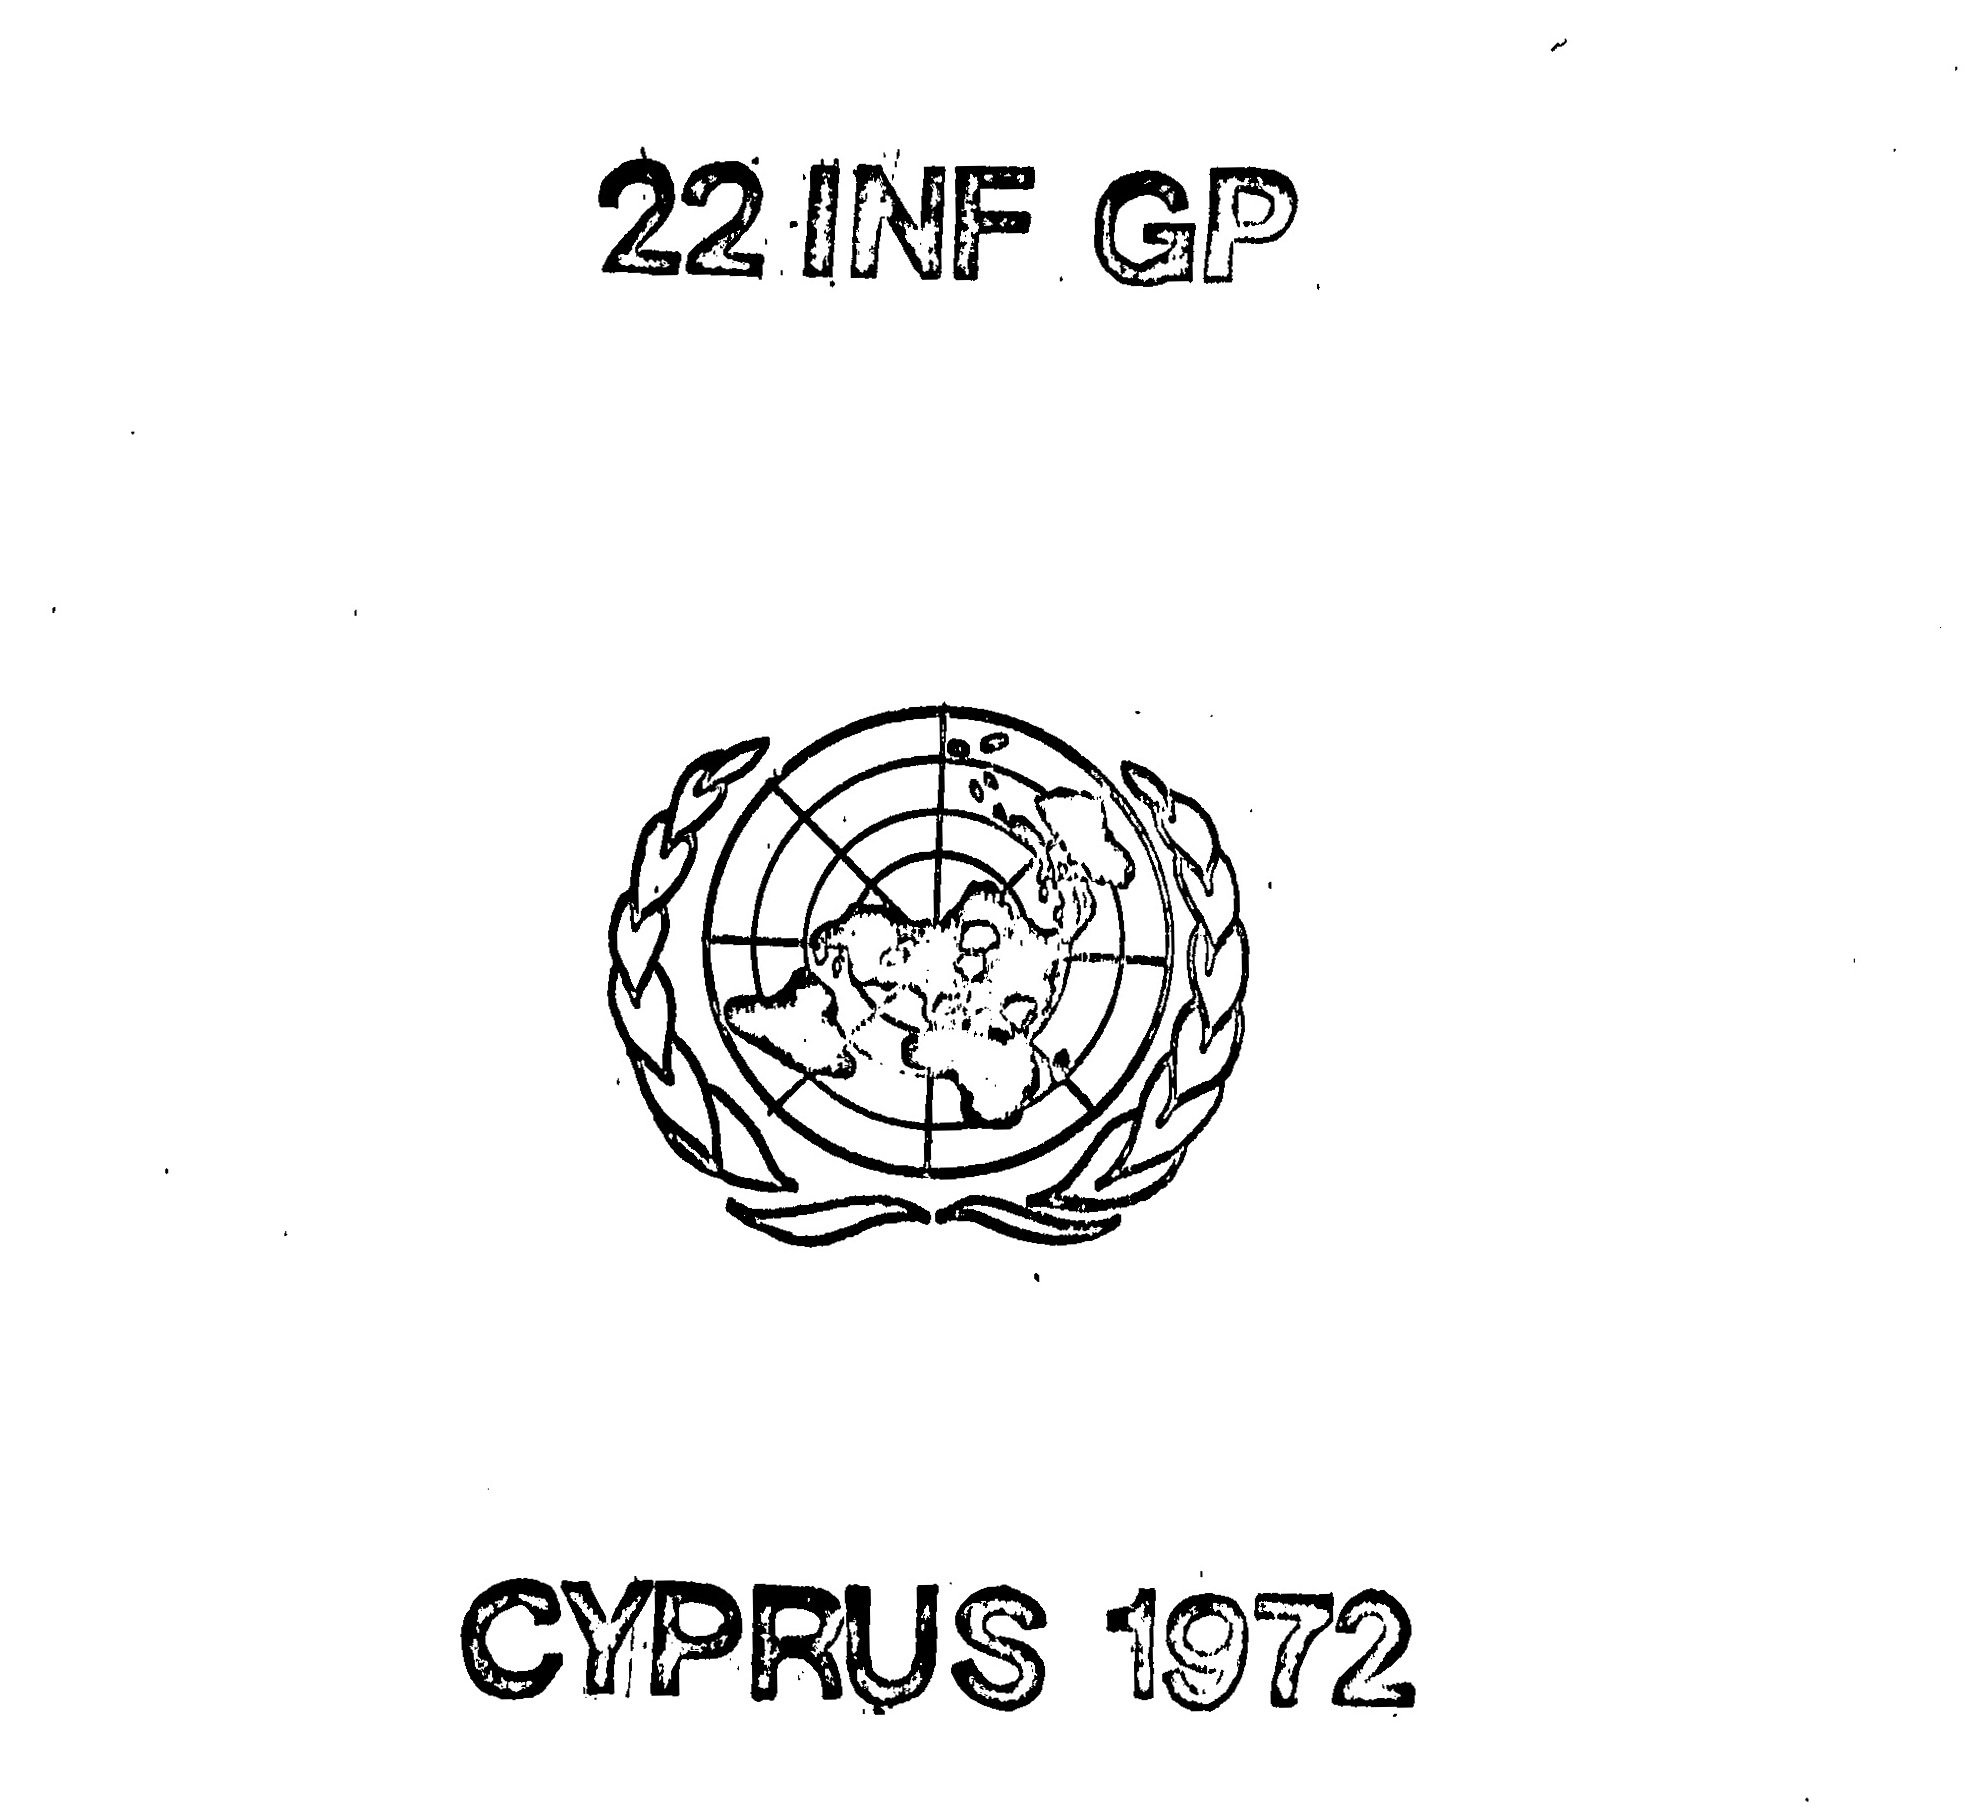 22 Inf Gp Cyprus